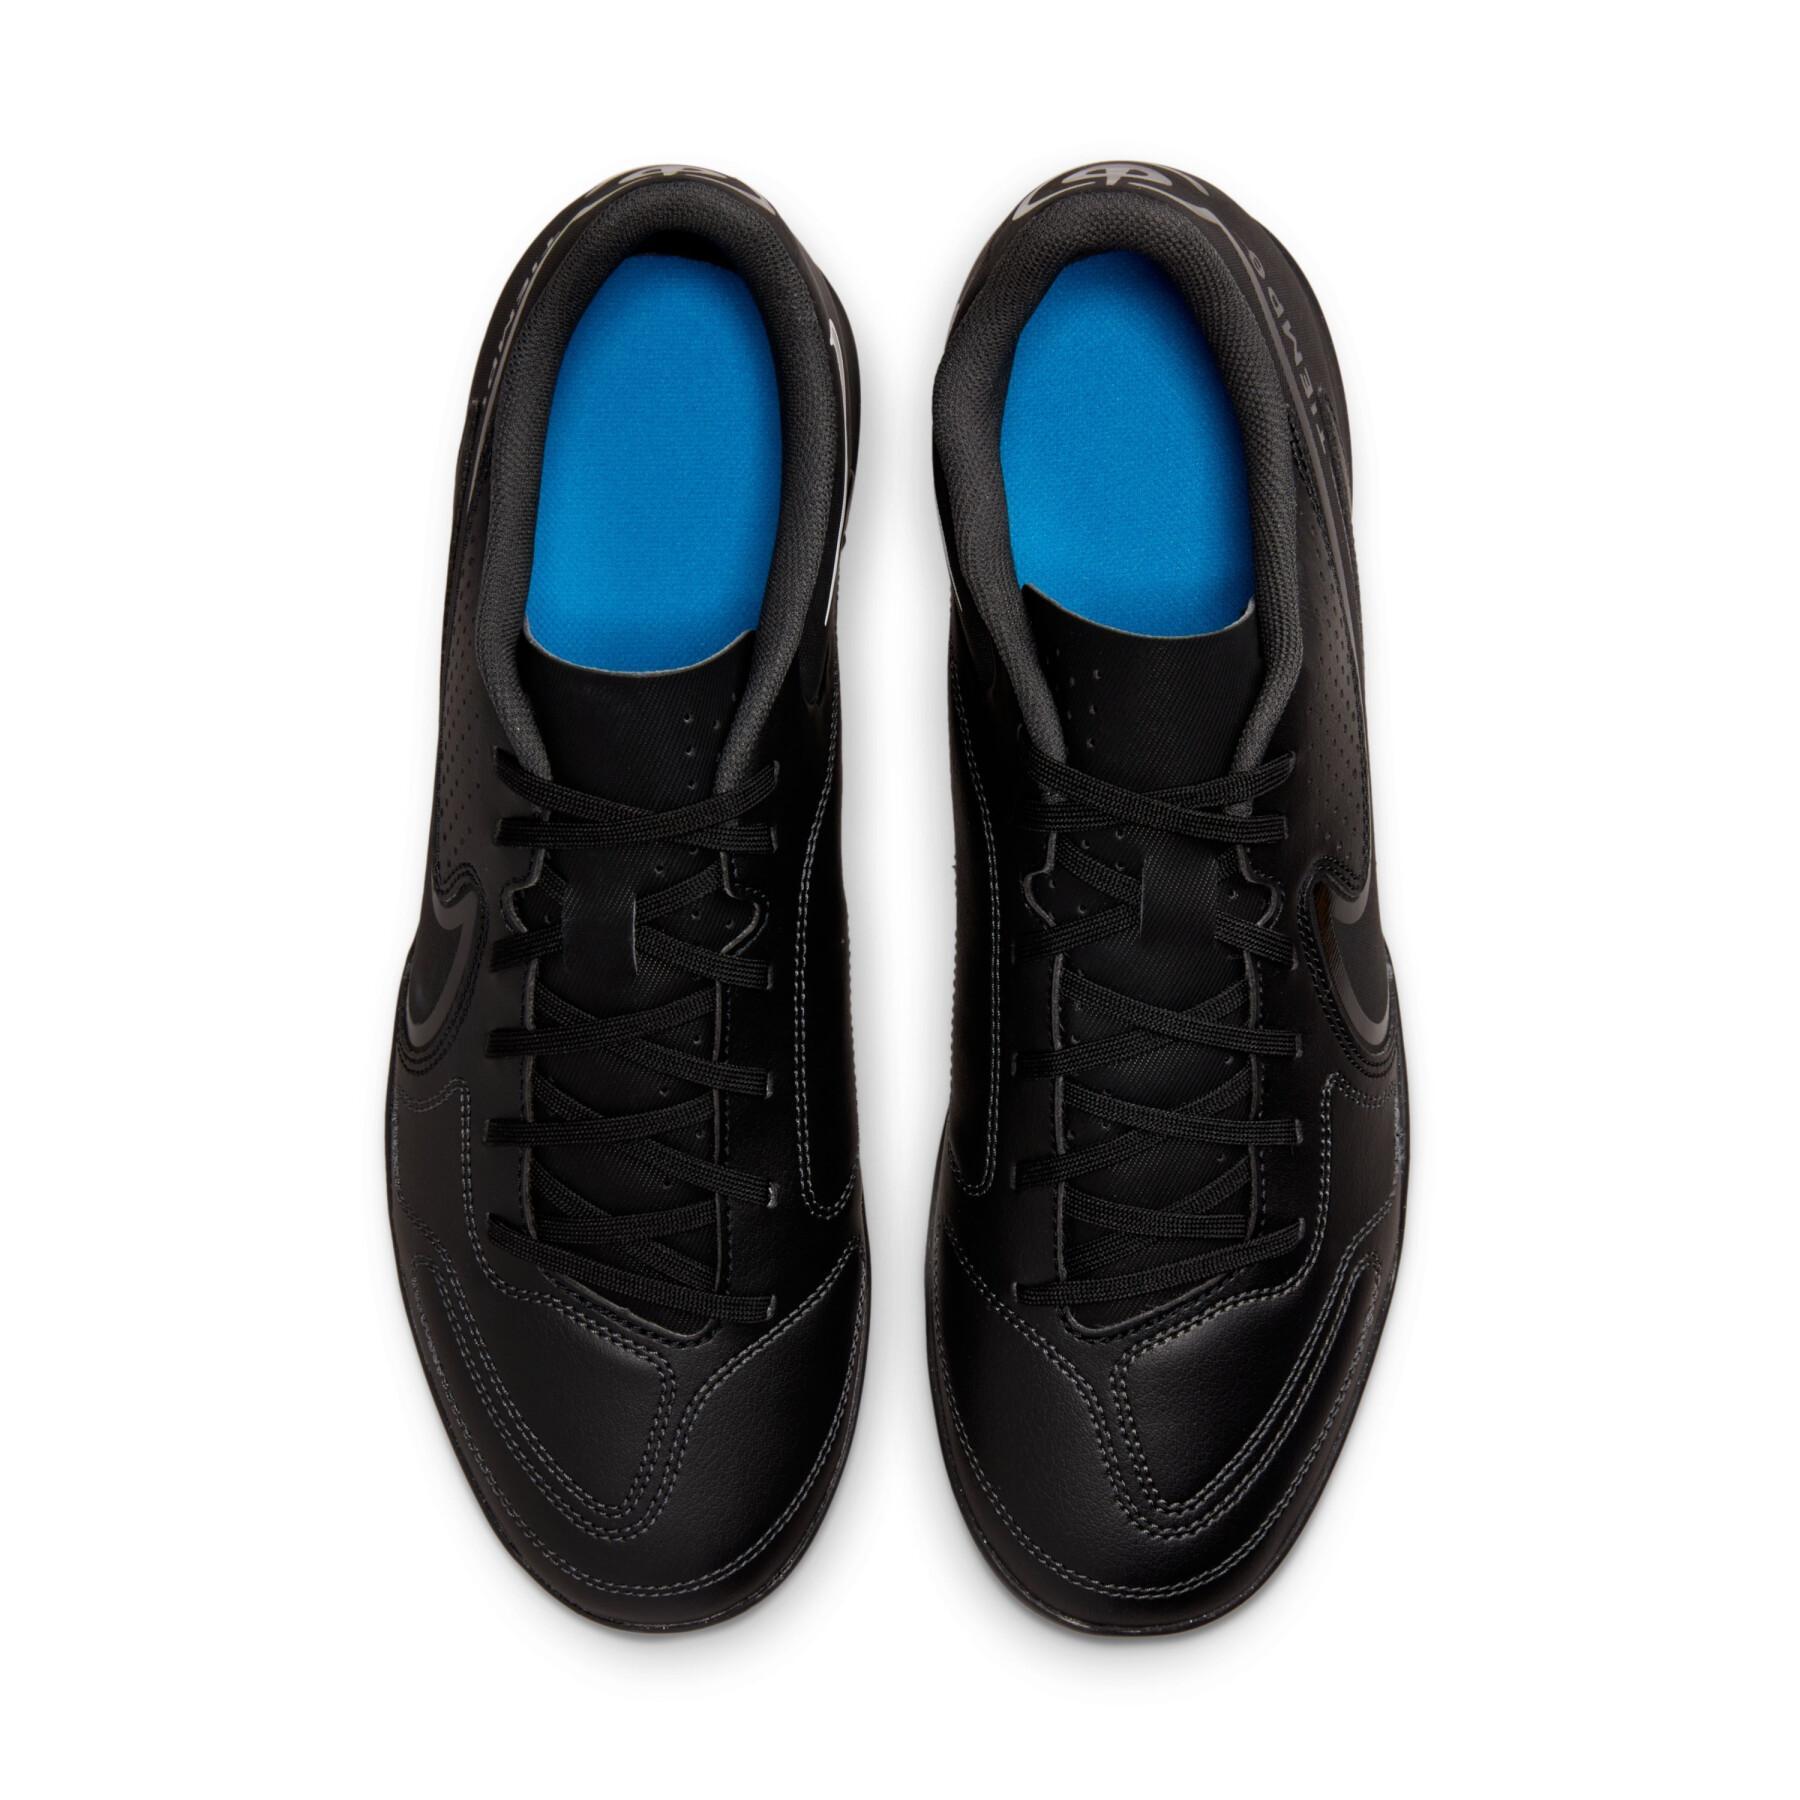 Sapatos de futebol Nike Tiempo Legend 9 Club TF - Shadow Black Pack